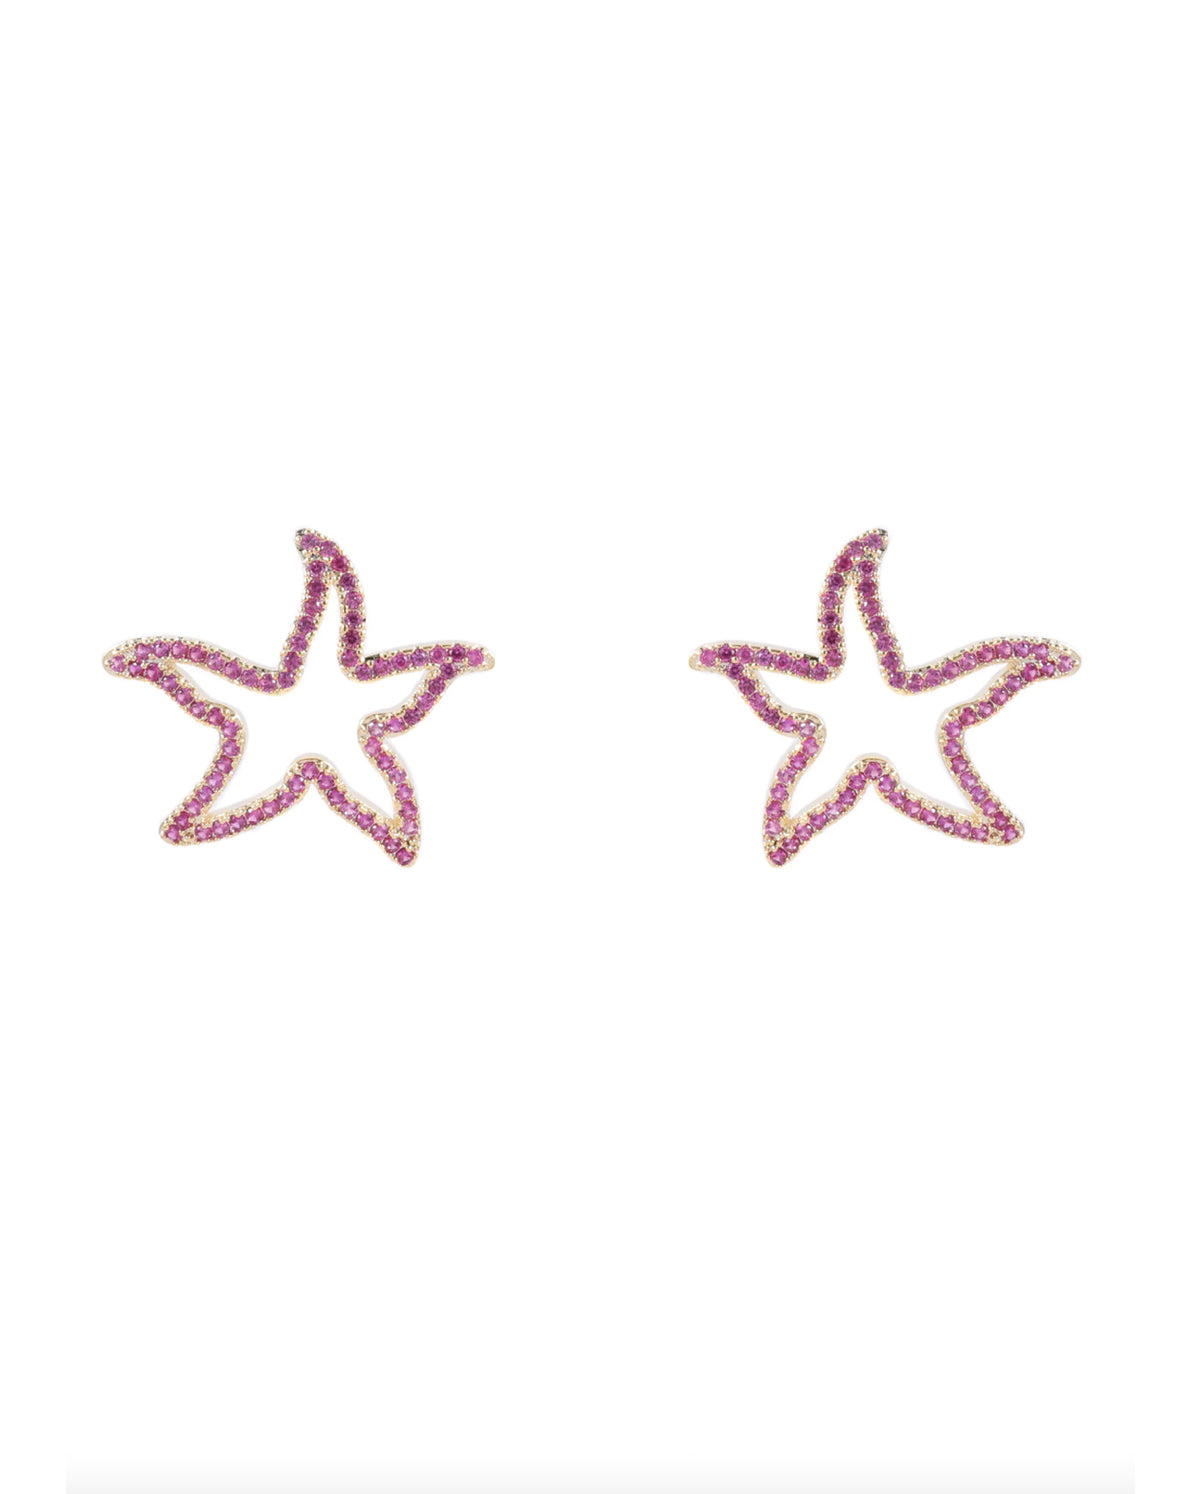 Sea Star Bling Earrings In Hot Pink